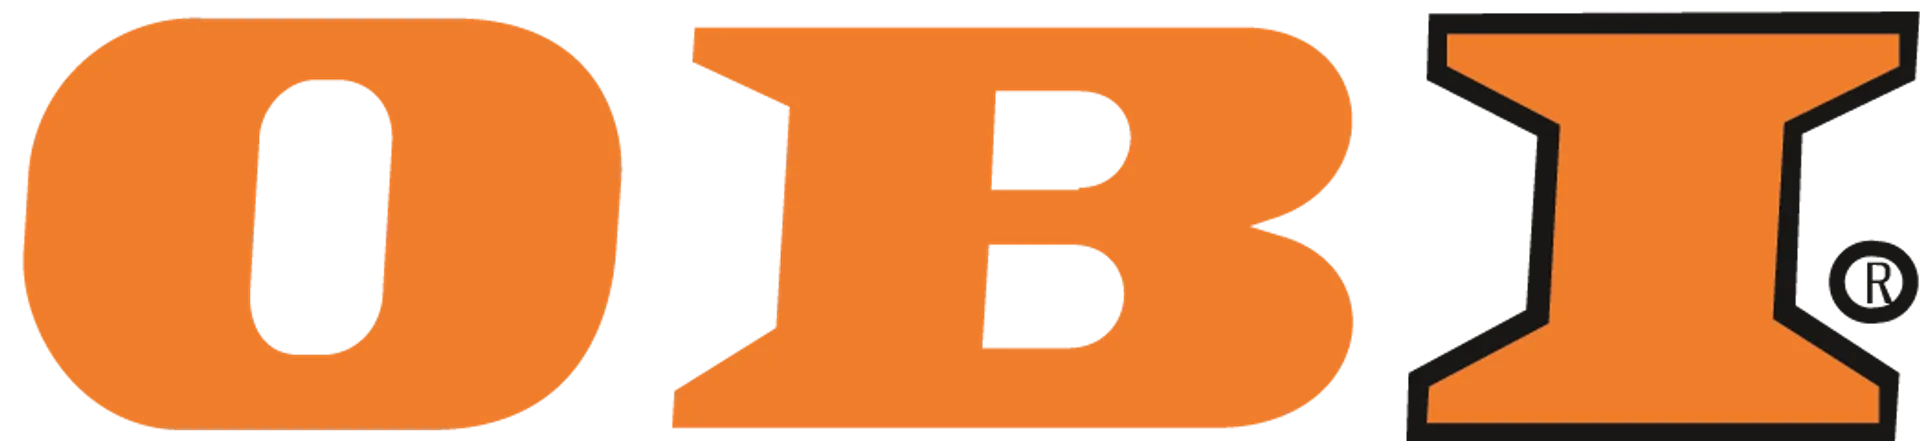 OBI logo